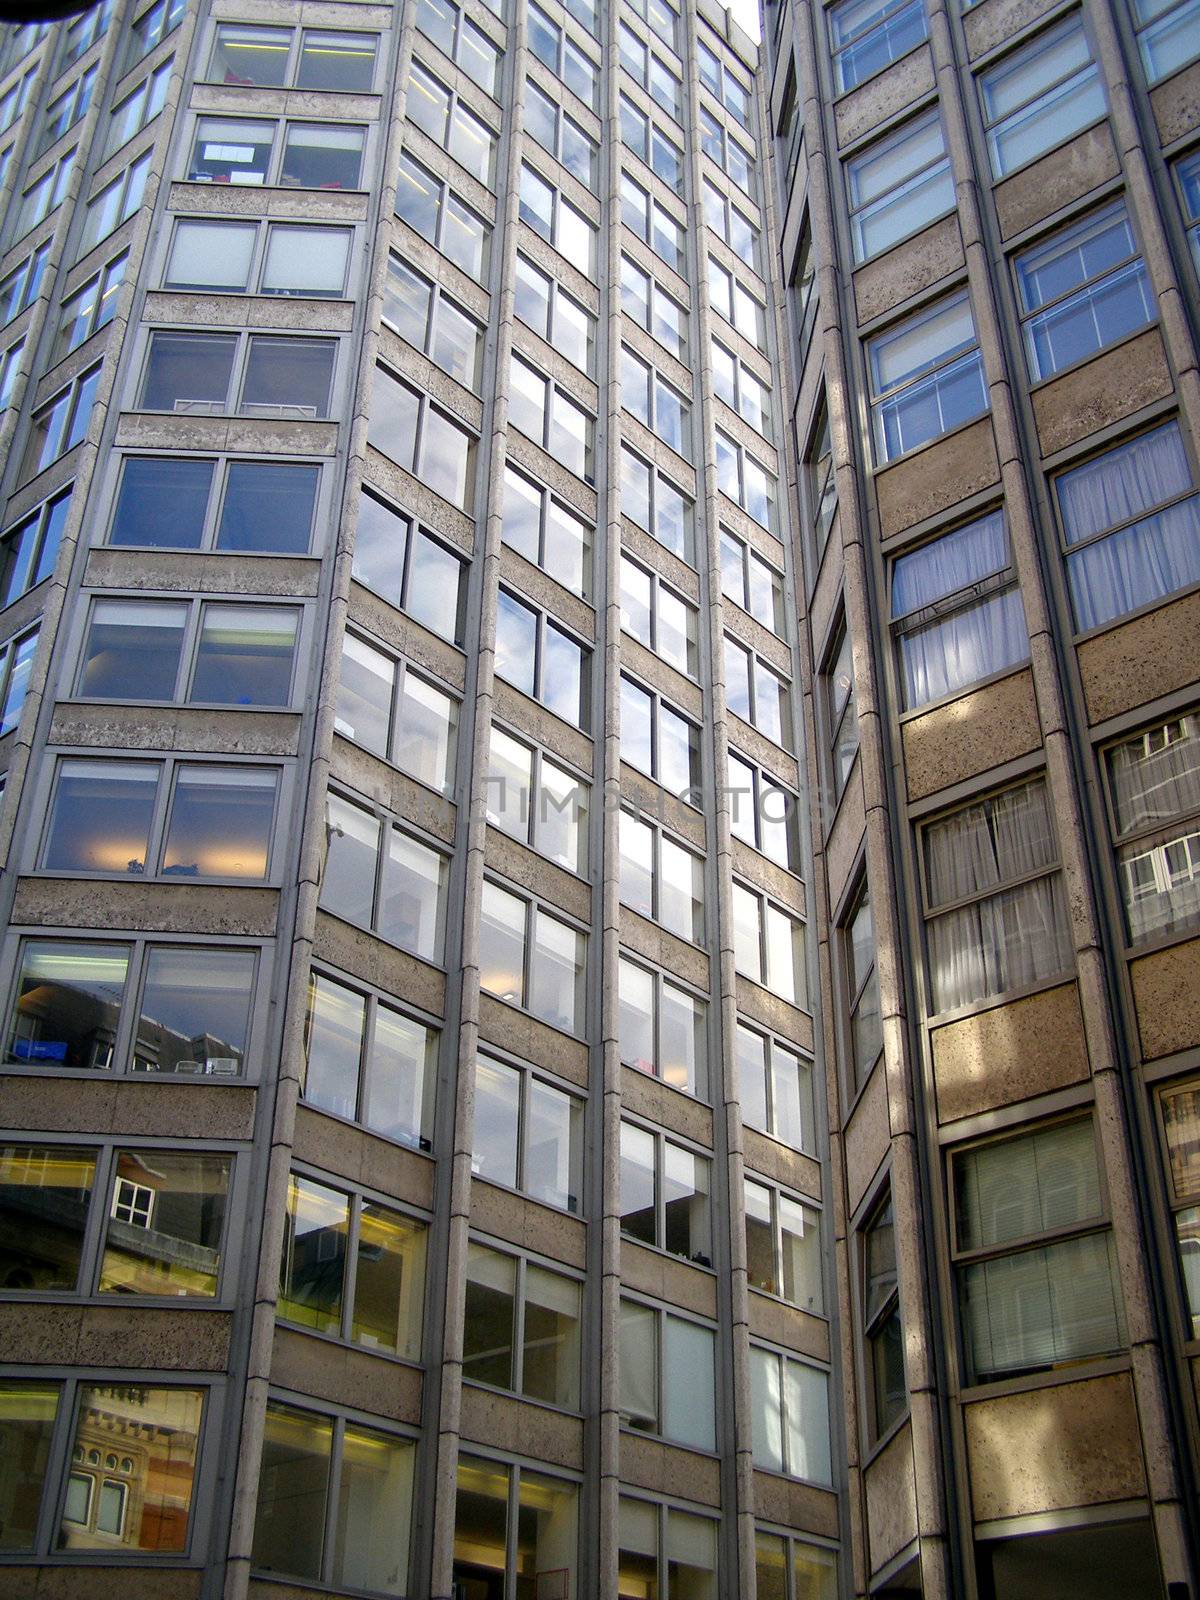 The Economist, modern brutalist architecture in London